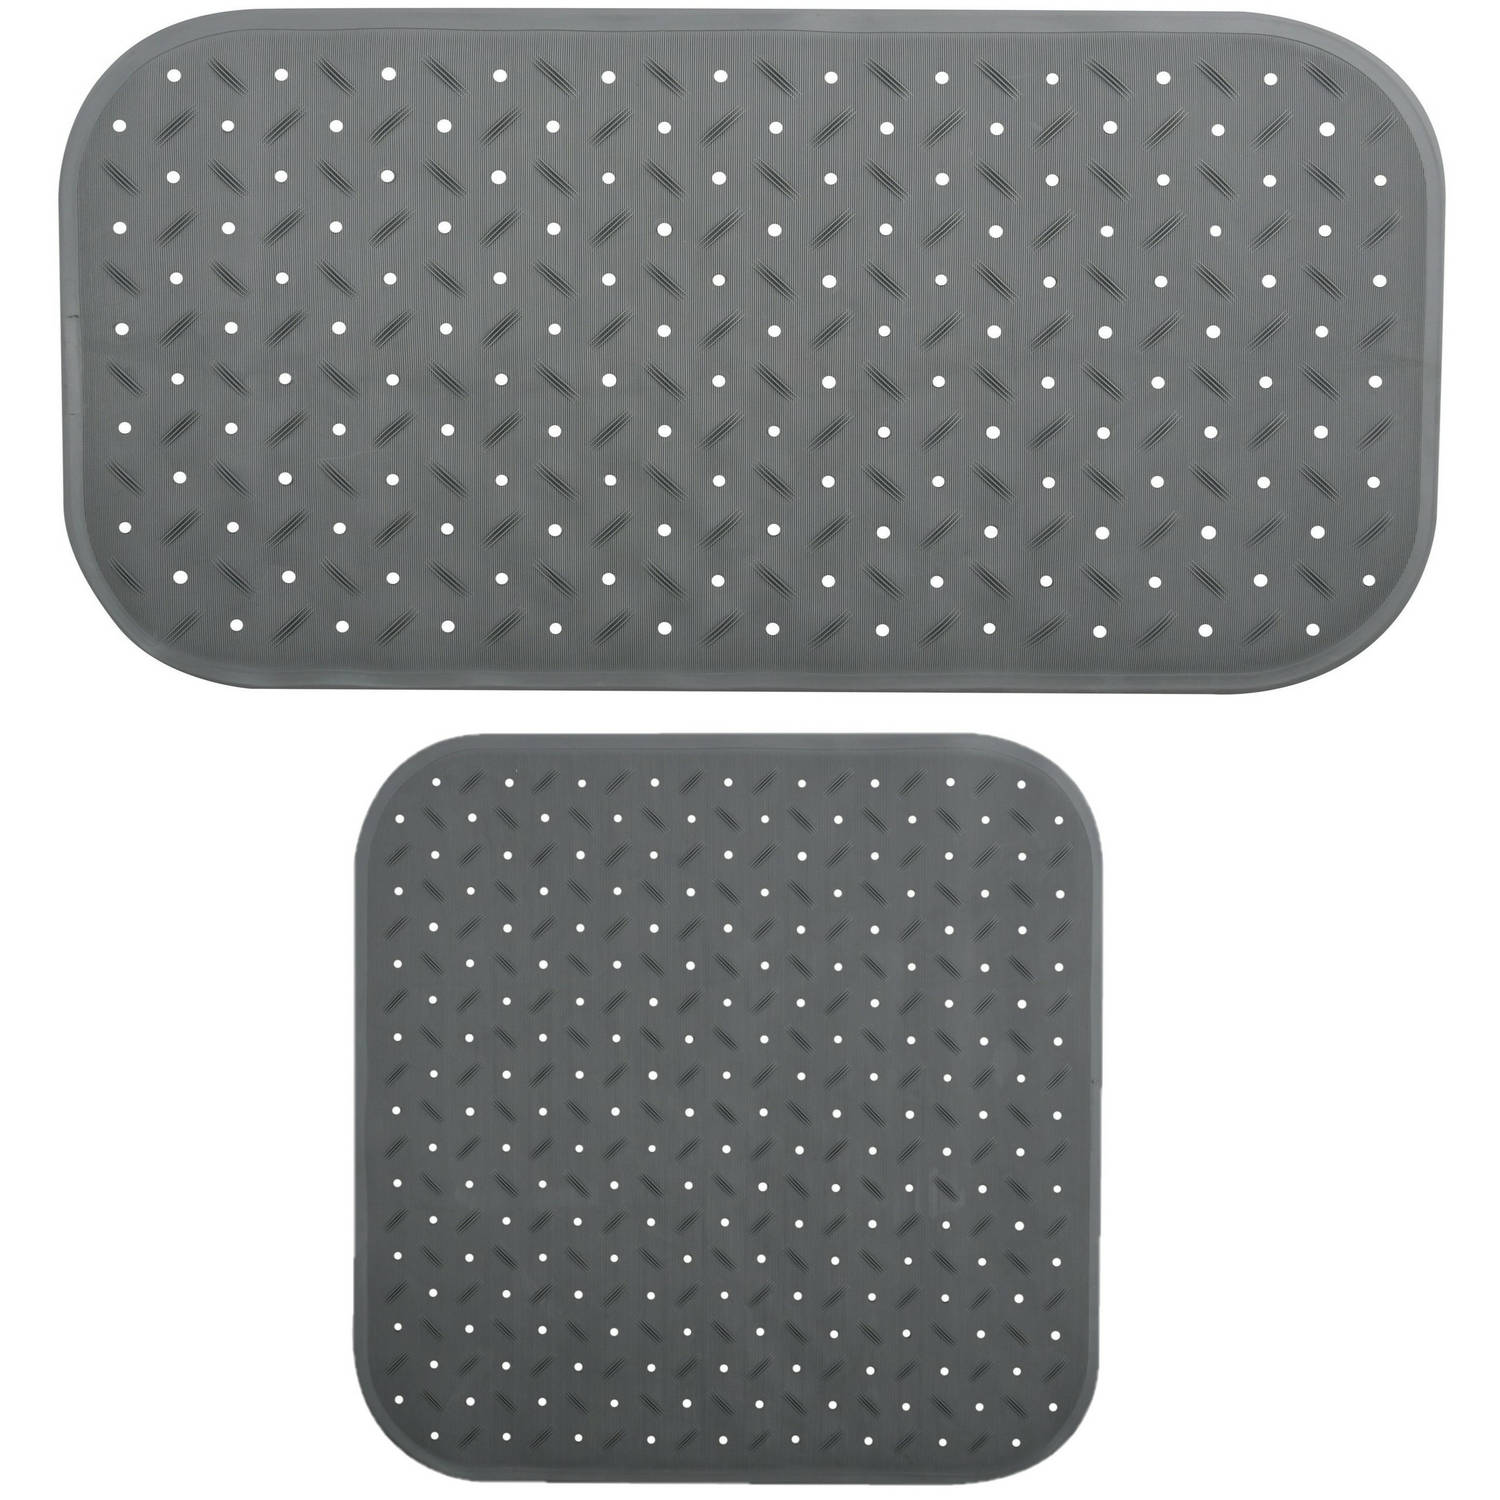 MSV Douche-bad anti-slip matten set badkamer rubber 2x stuks donkergrijs 2 formaten Badmatjes